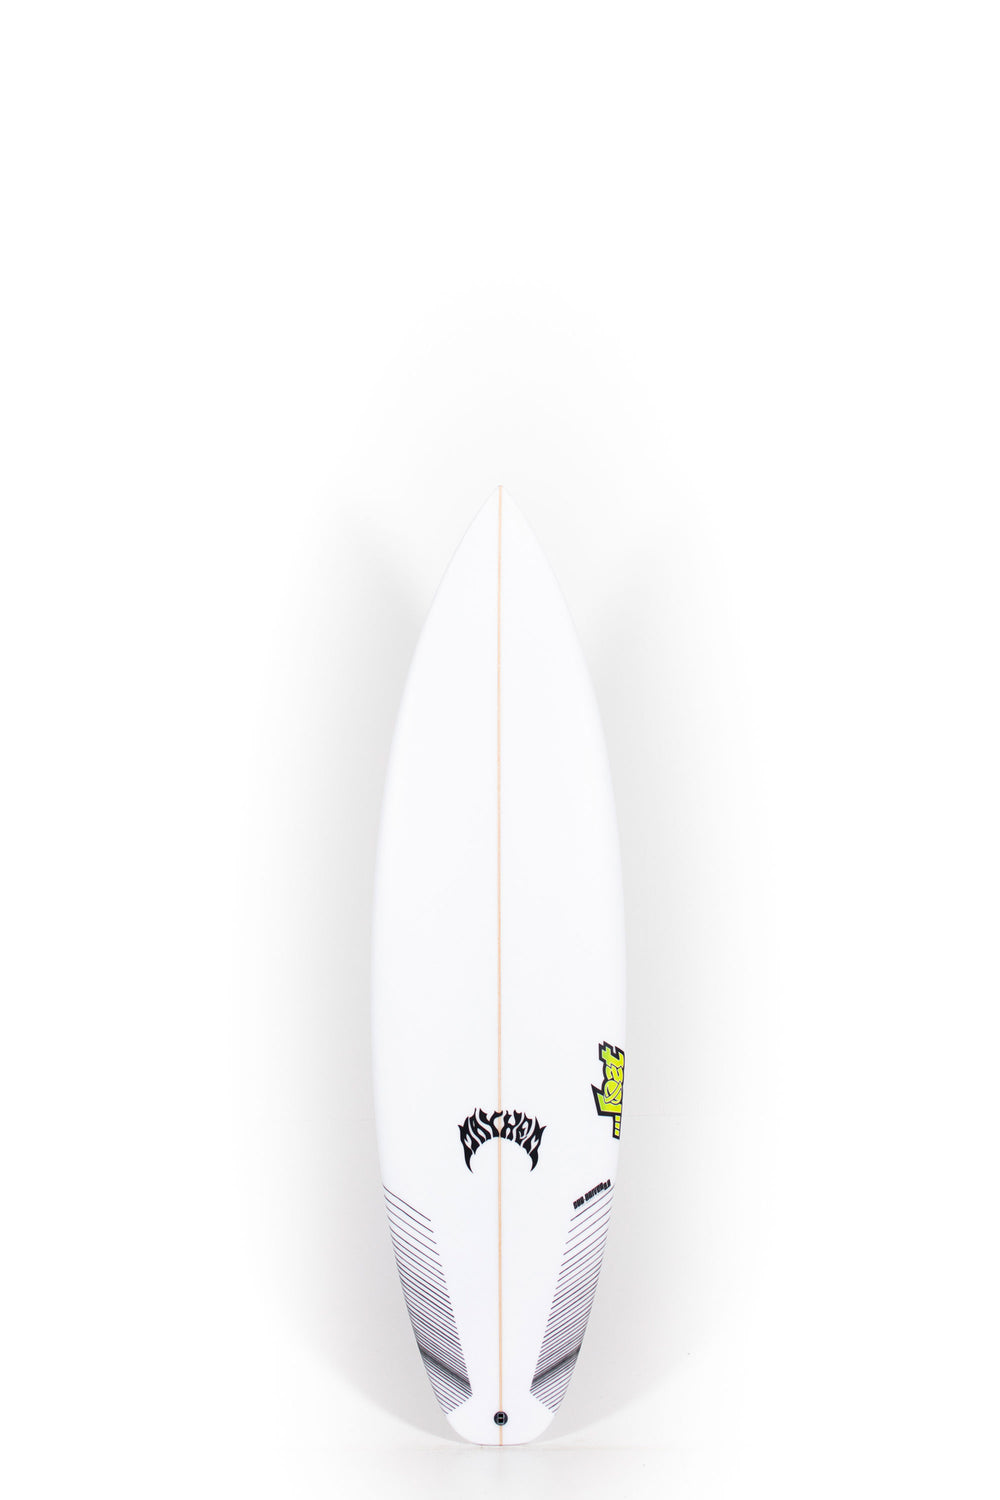 Pukas Surf Shop - Lost Surfboards - SUB DRIVER 2.0 by Matt Biolos - 6’1” x 19,75 x 2,44 - 31,5L - MH12601